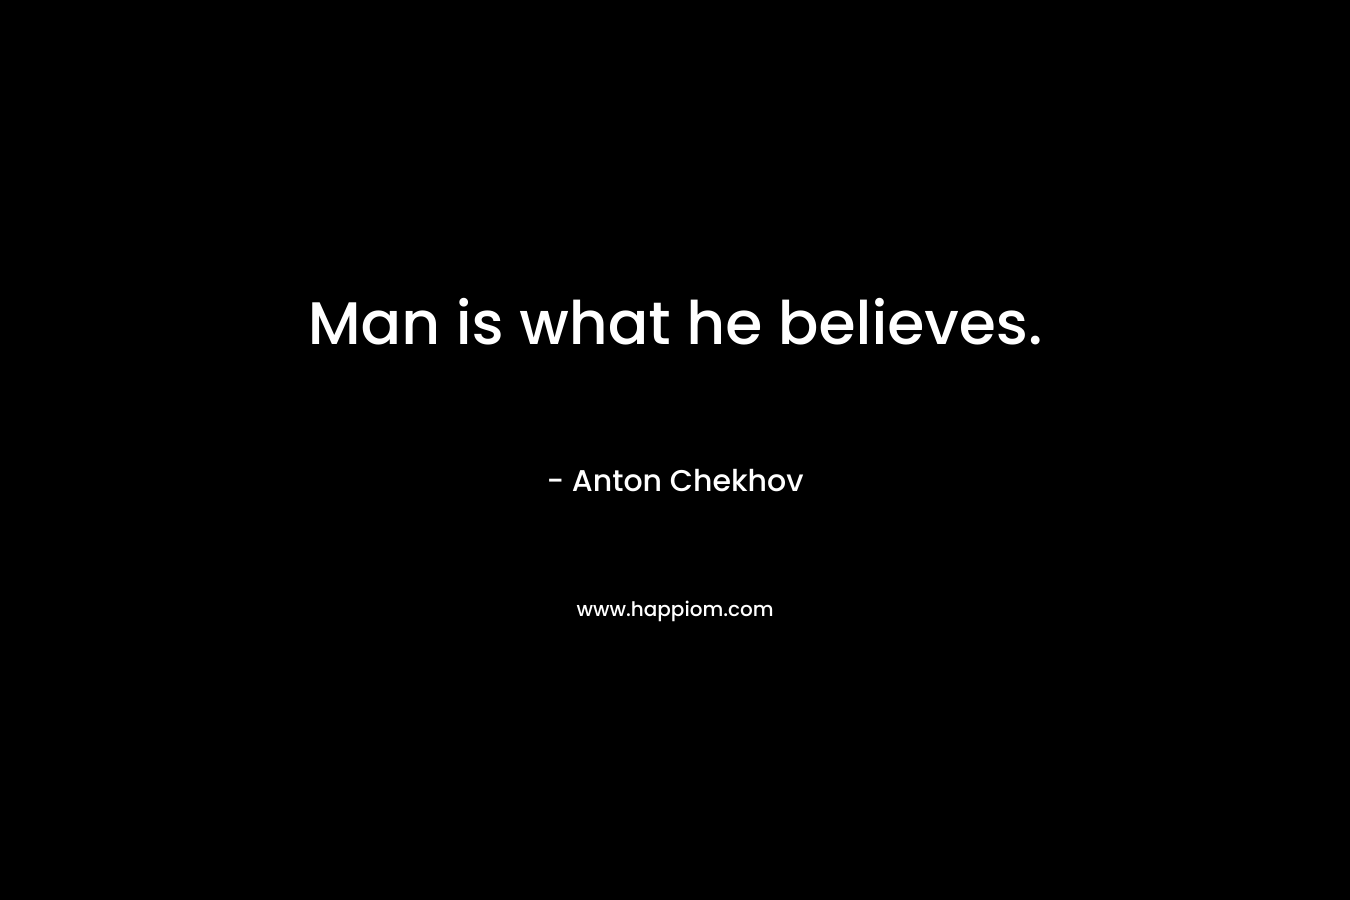 Man is what he believes. – Anton Chekhov